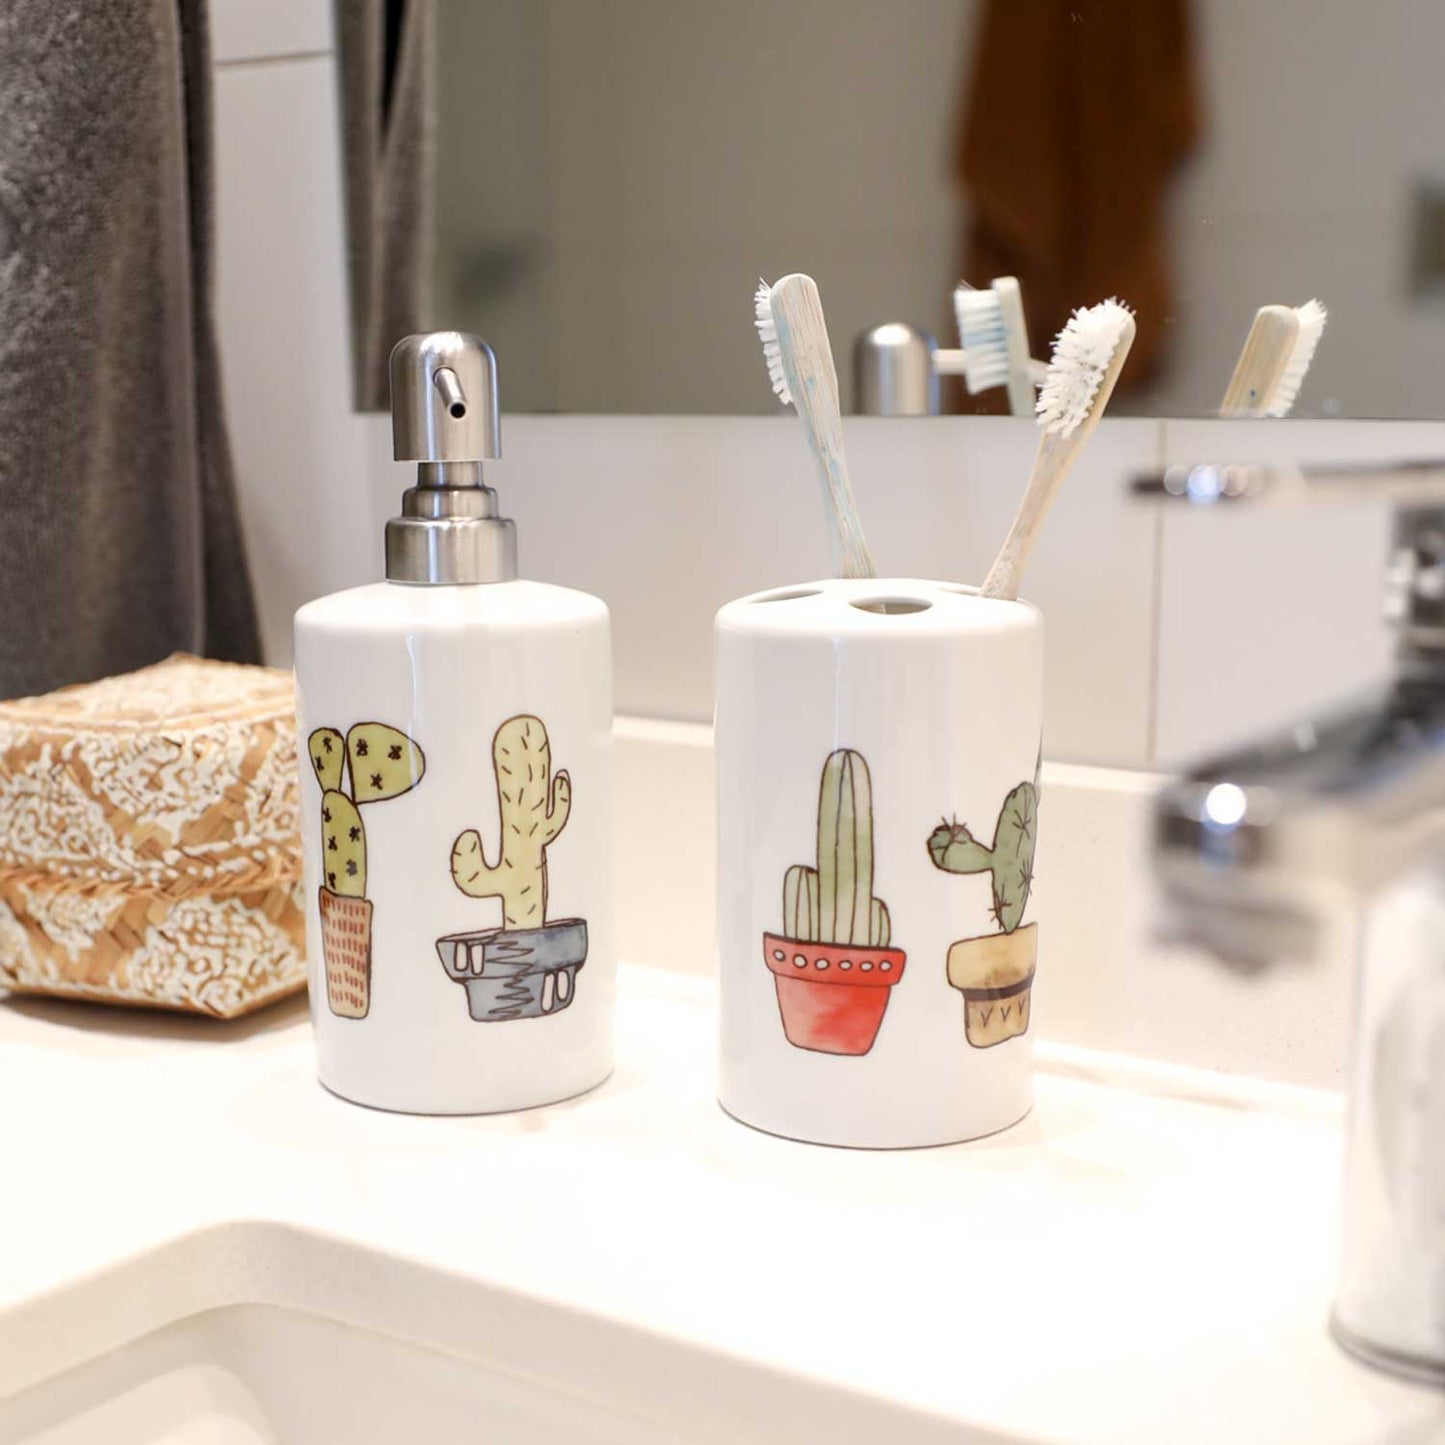 Set de baño cerámica cactus 2 piezas